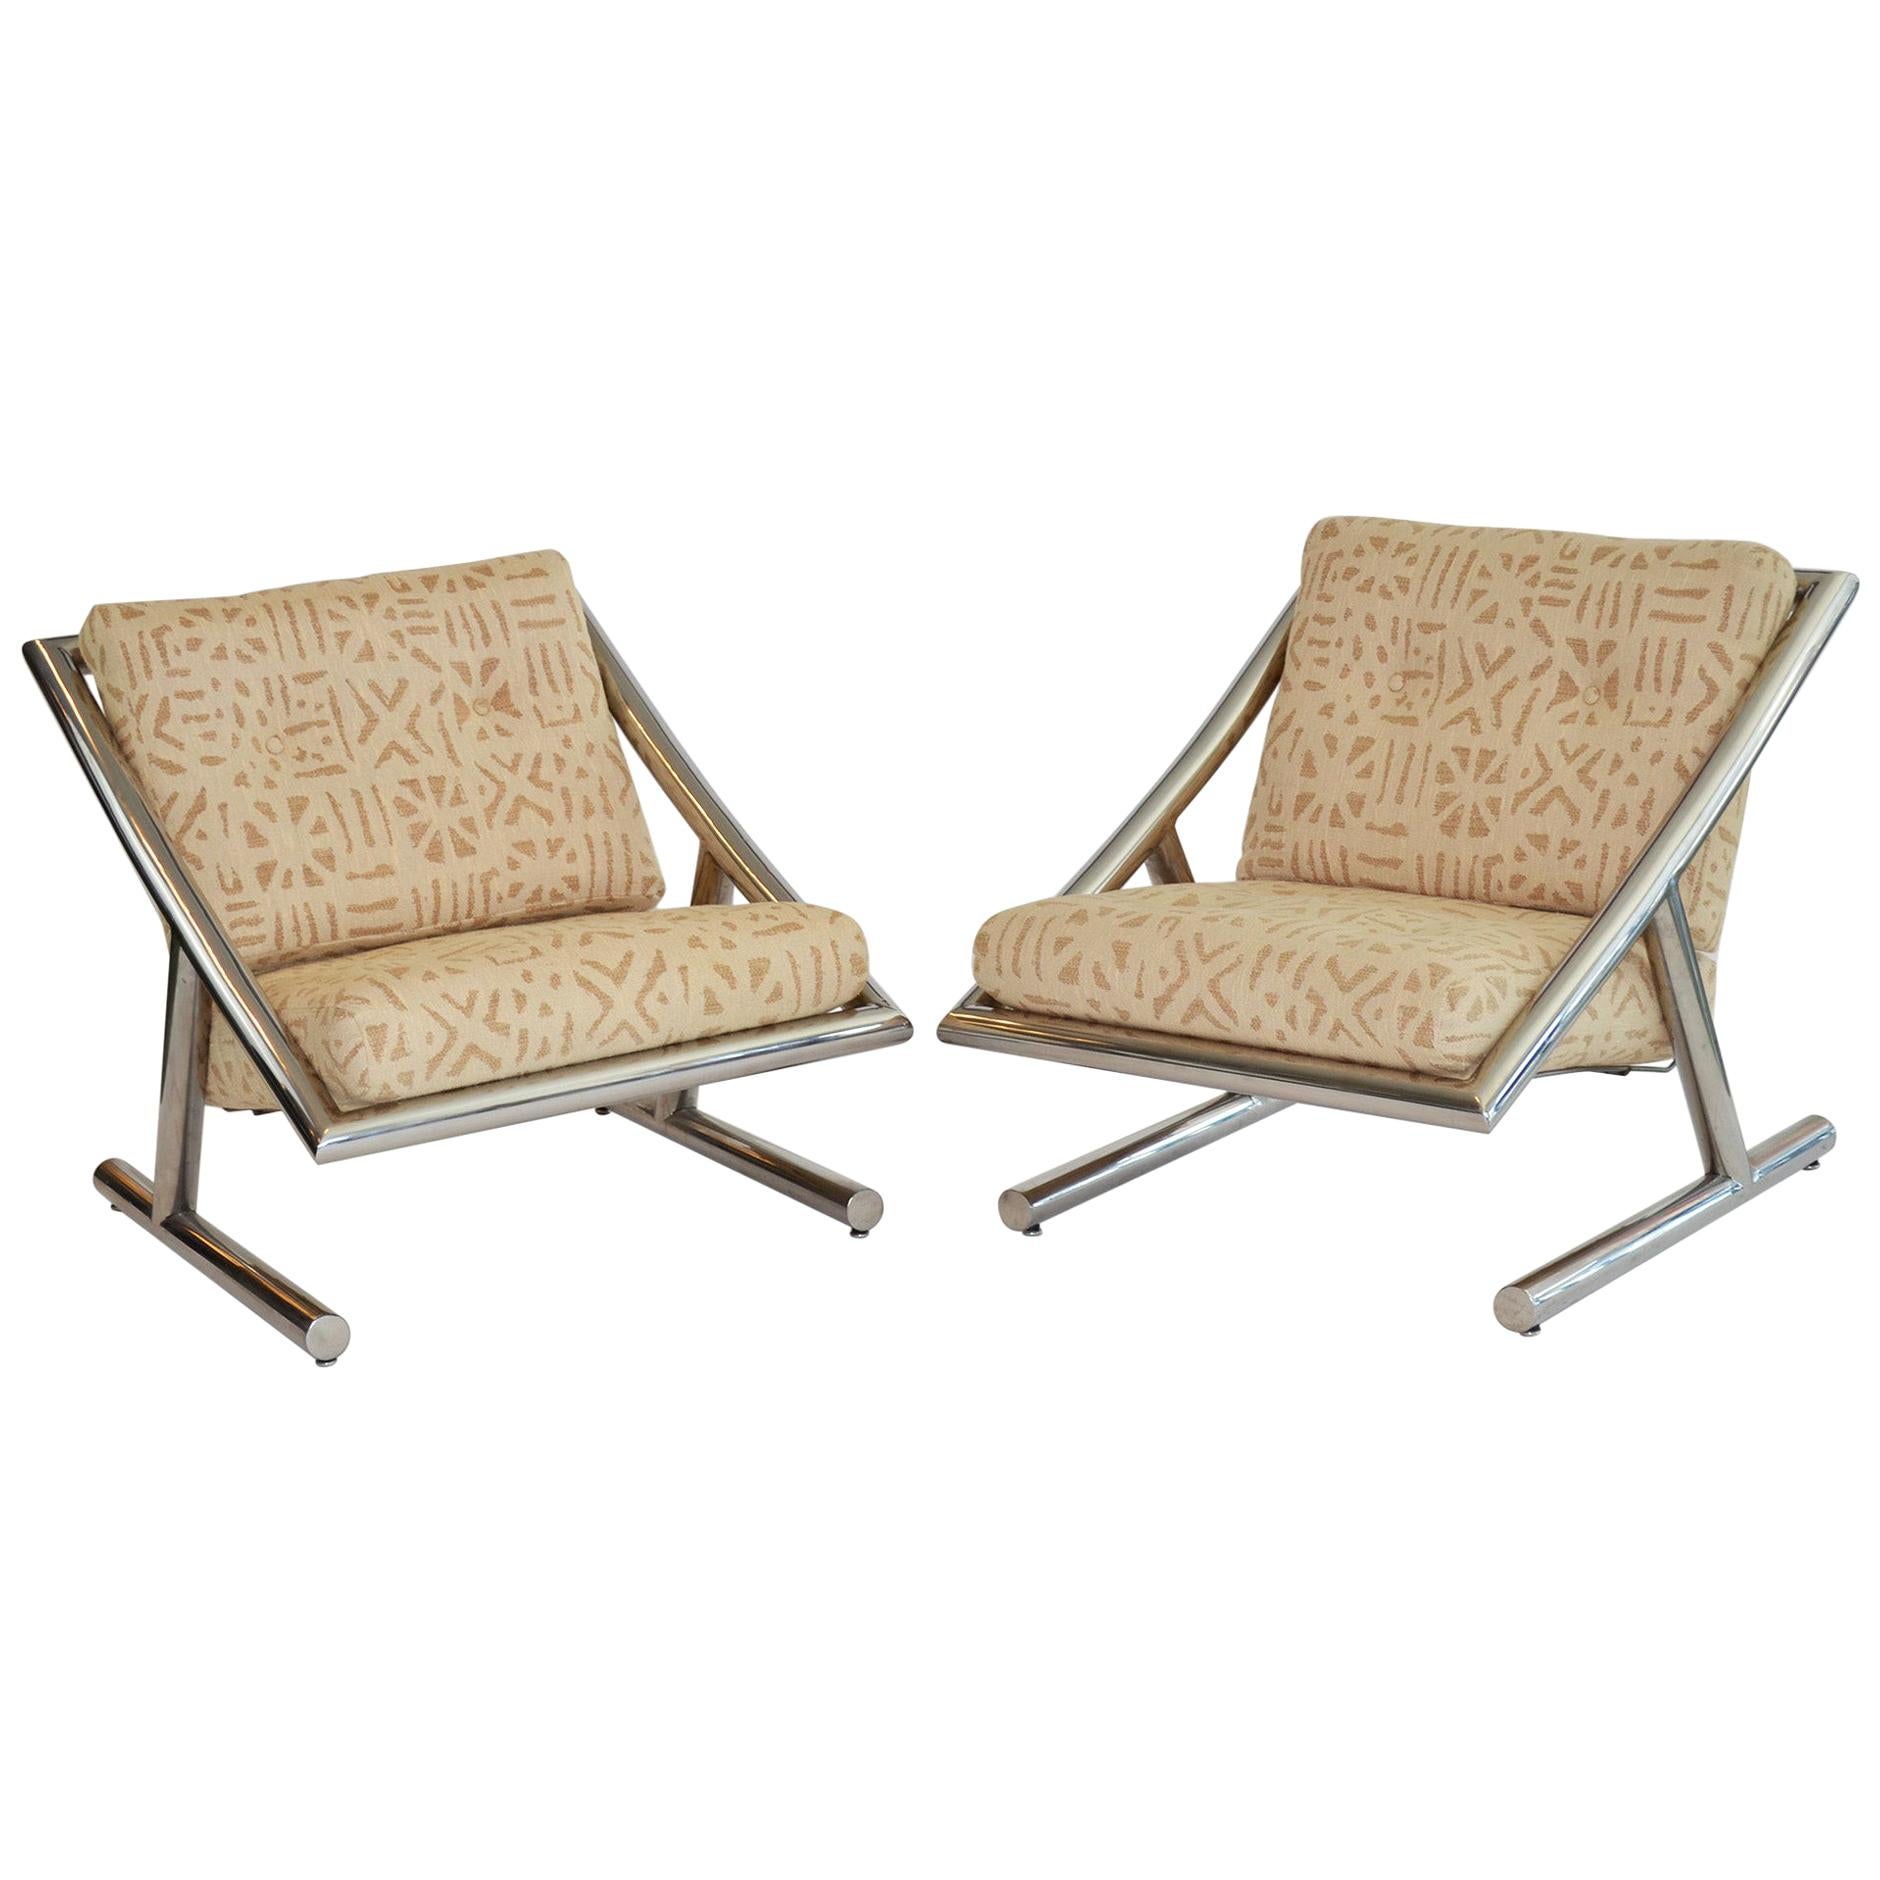 Pair of Arthur Umanoff Chrome Lounge Chairs, Directional, 1970s